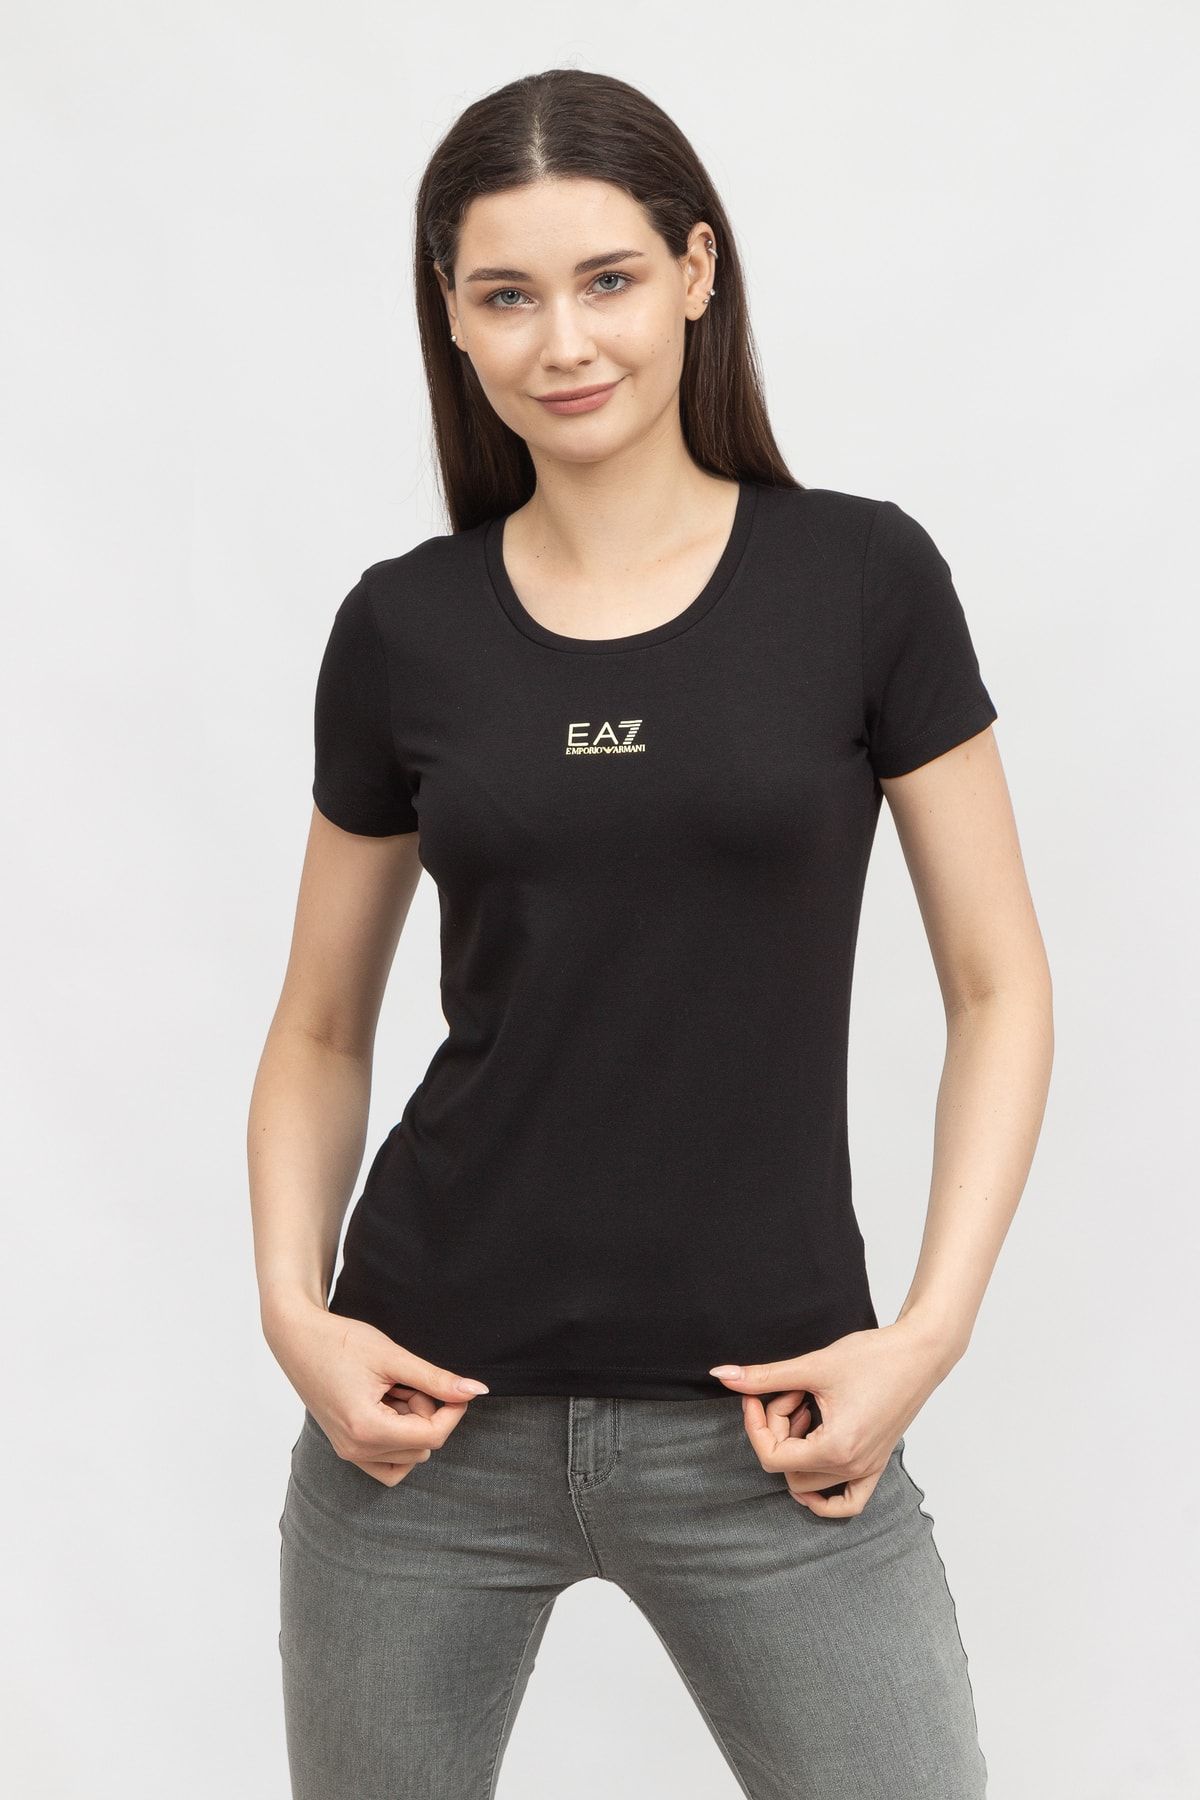 EA7 Kadın Bisiklet Yaka T-shirt3rtt05tjdzz